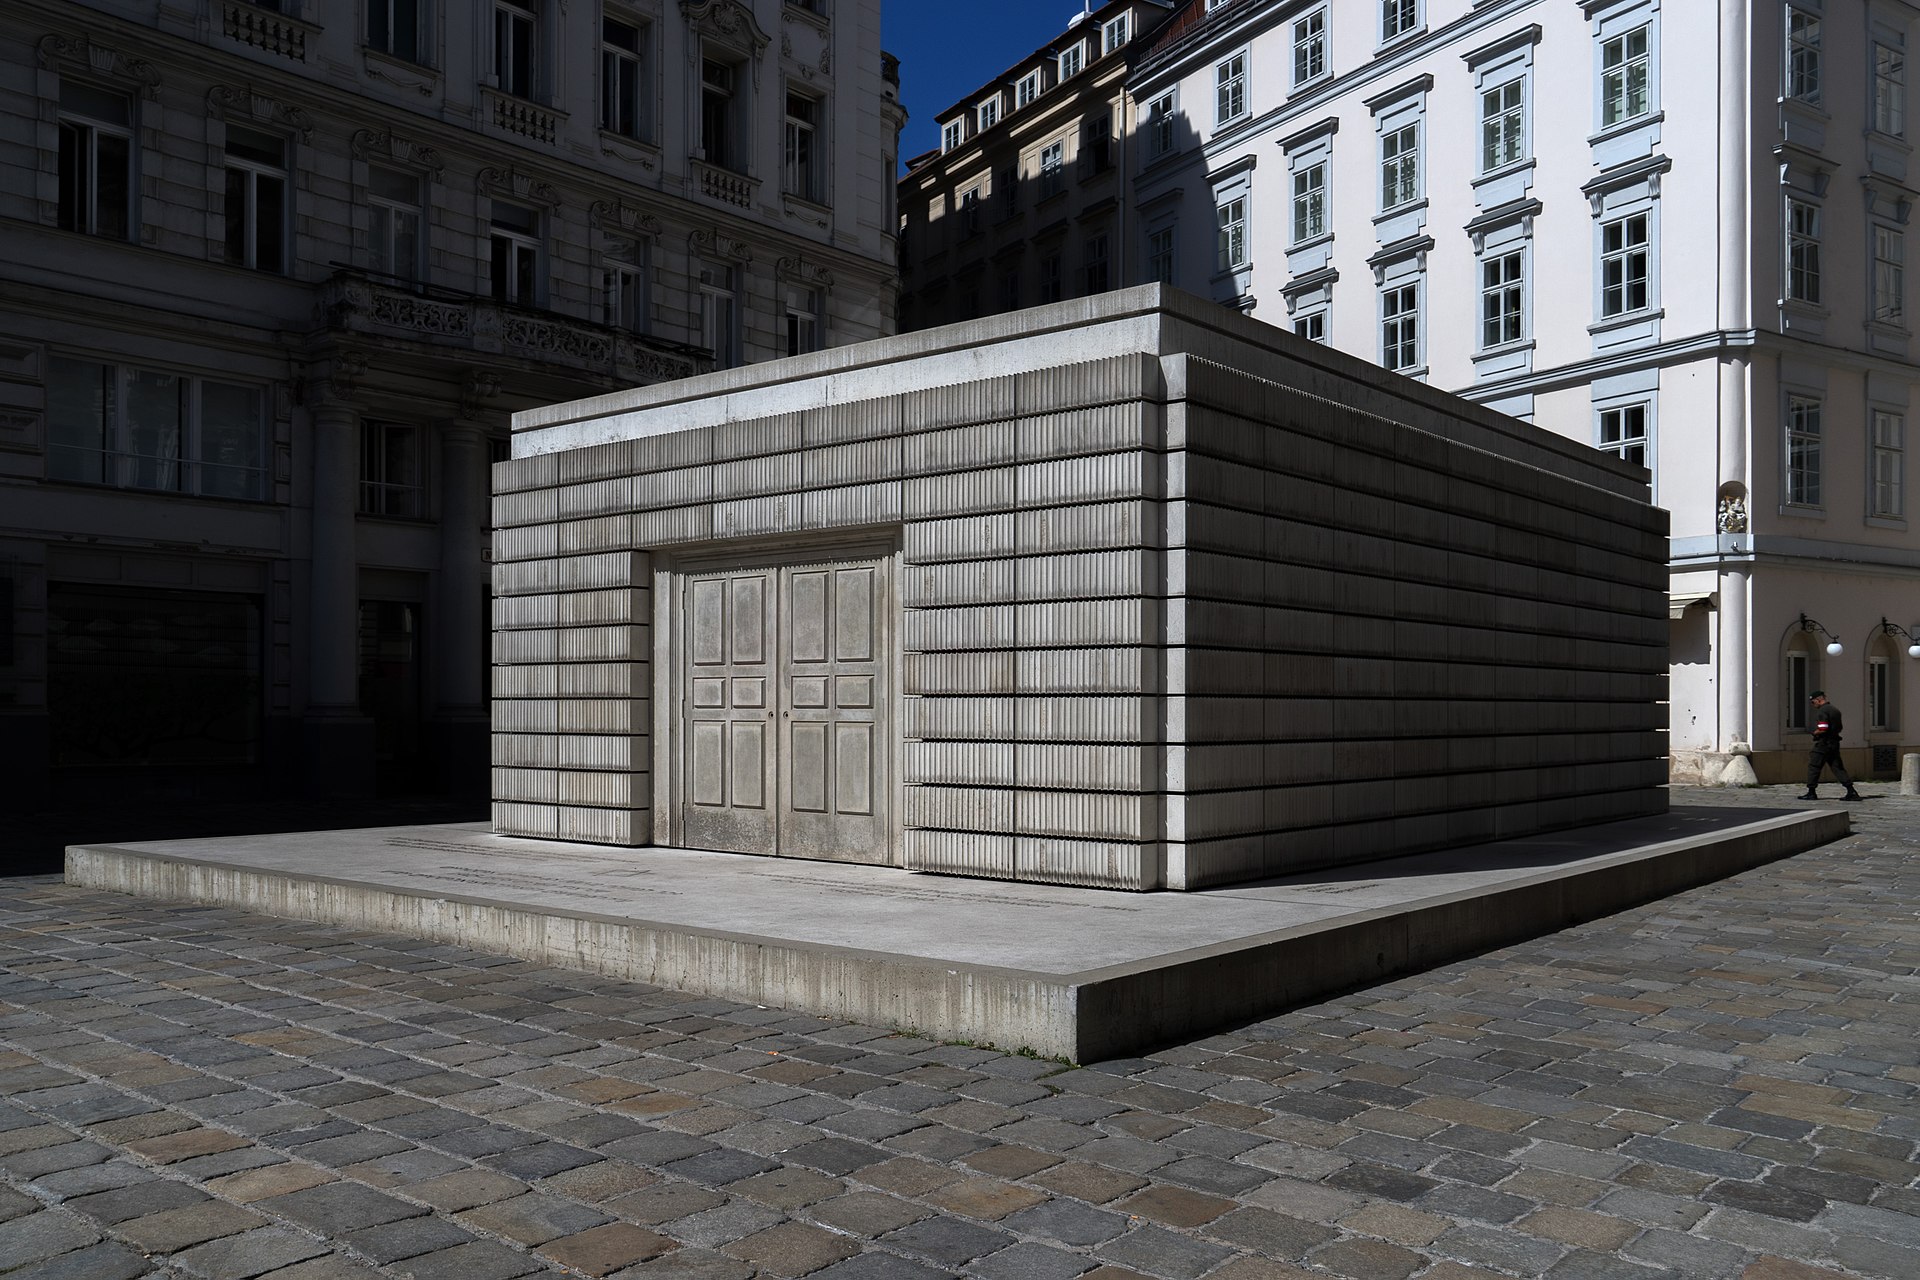 Judenplatz Holocaust Memorial in Vienna, Austria